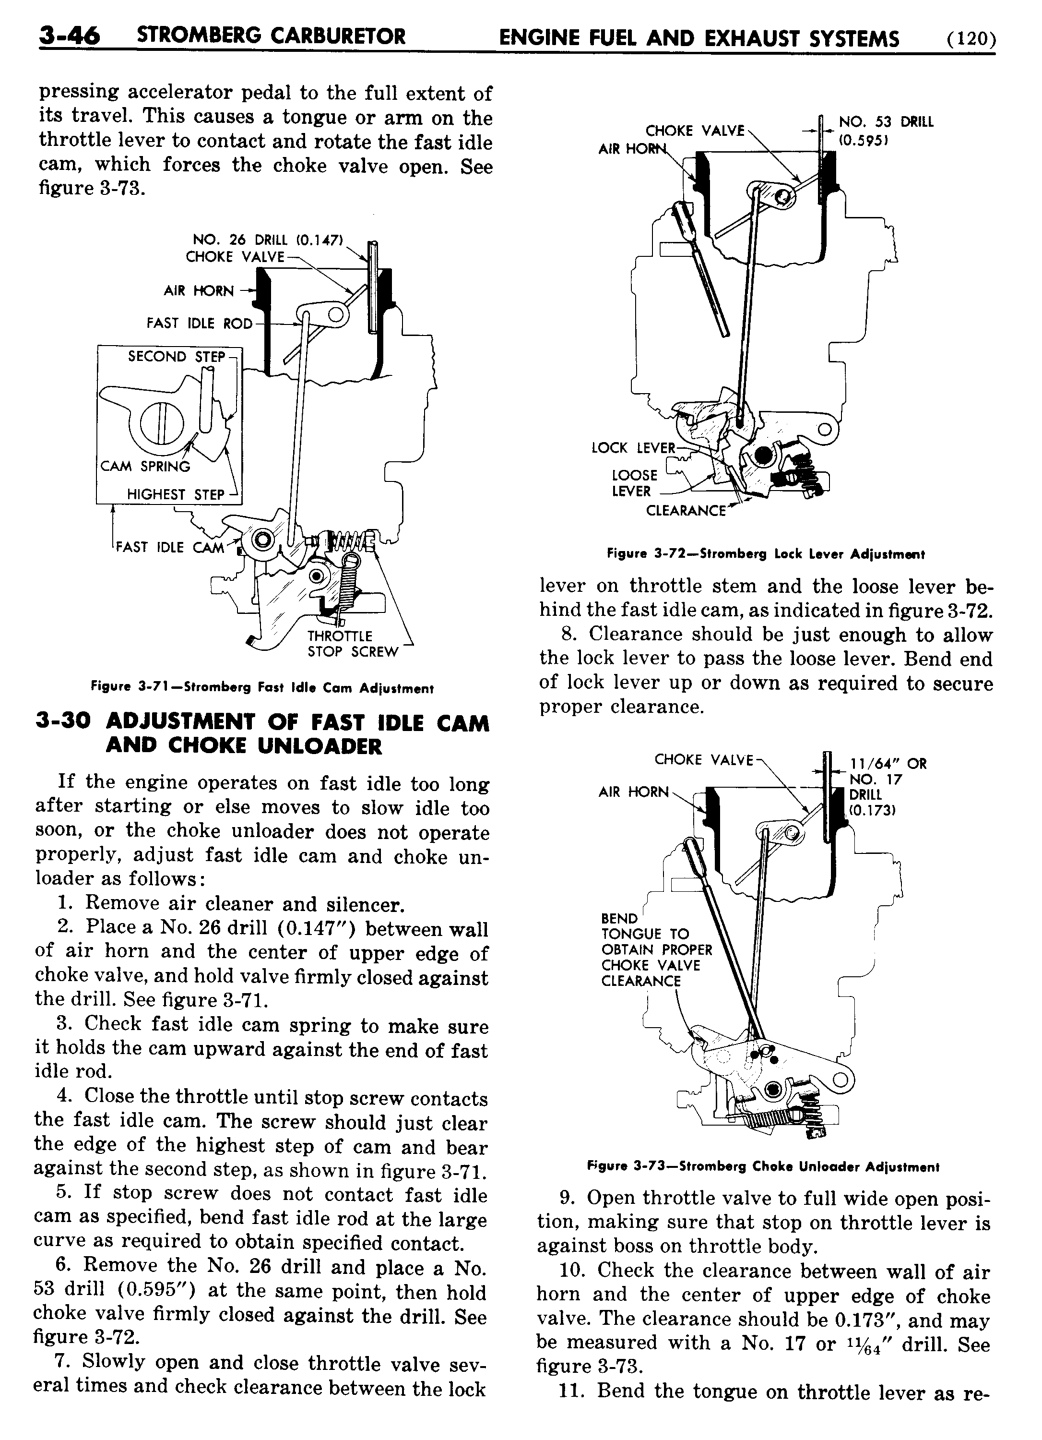 n_04 1948 Buick Shop Manual - Engine Fuel & Exhaust-046-046.jpg